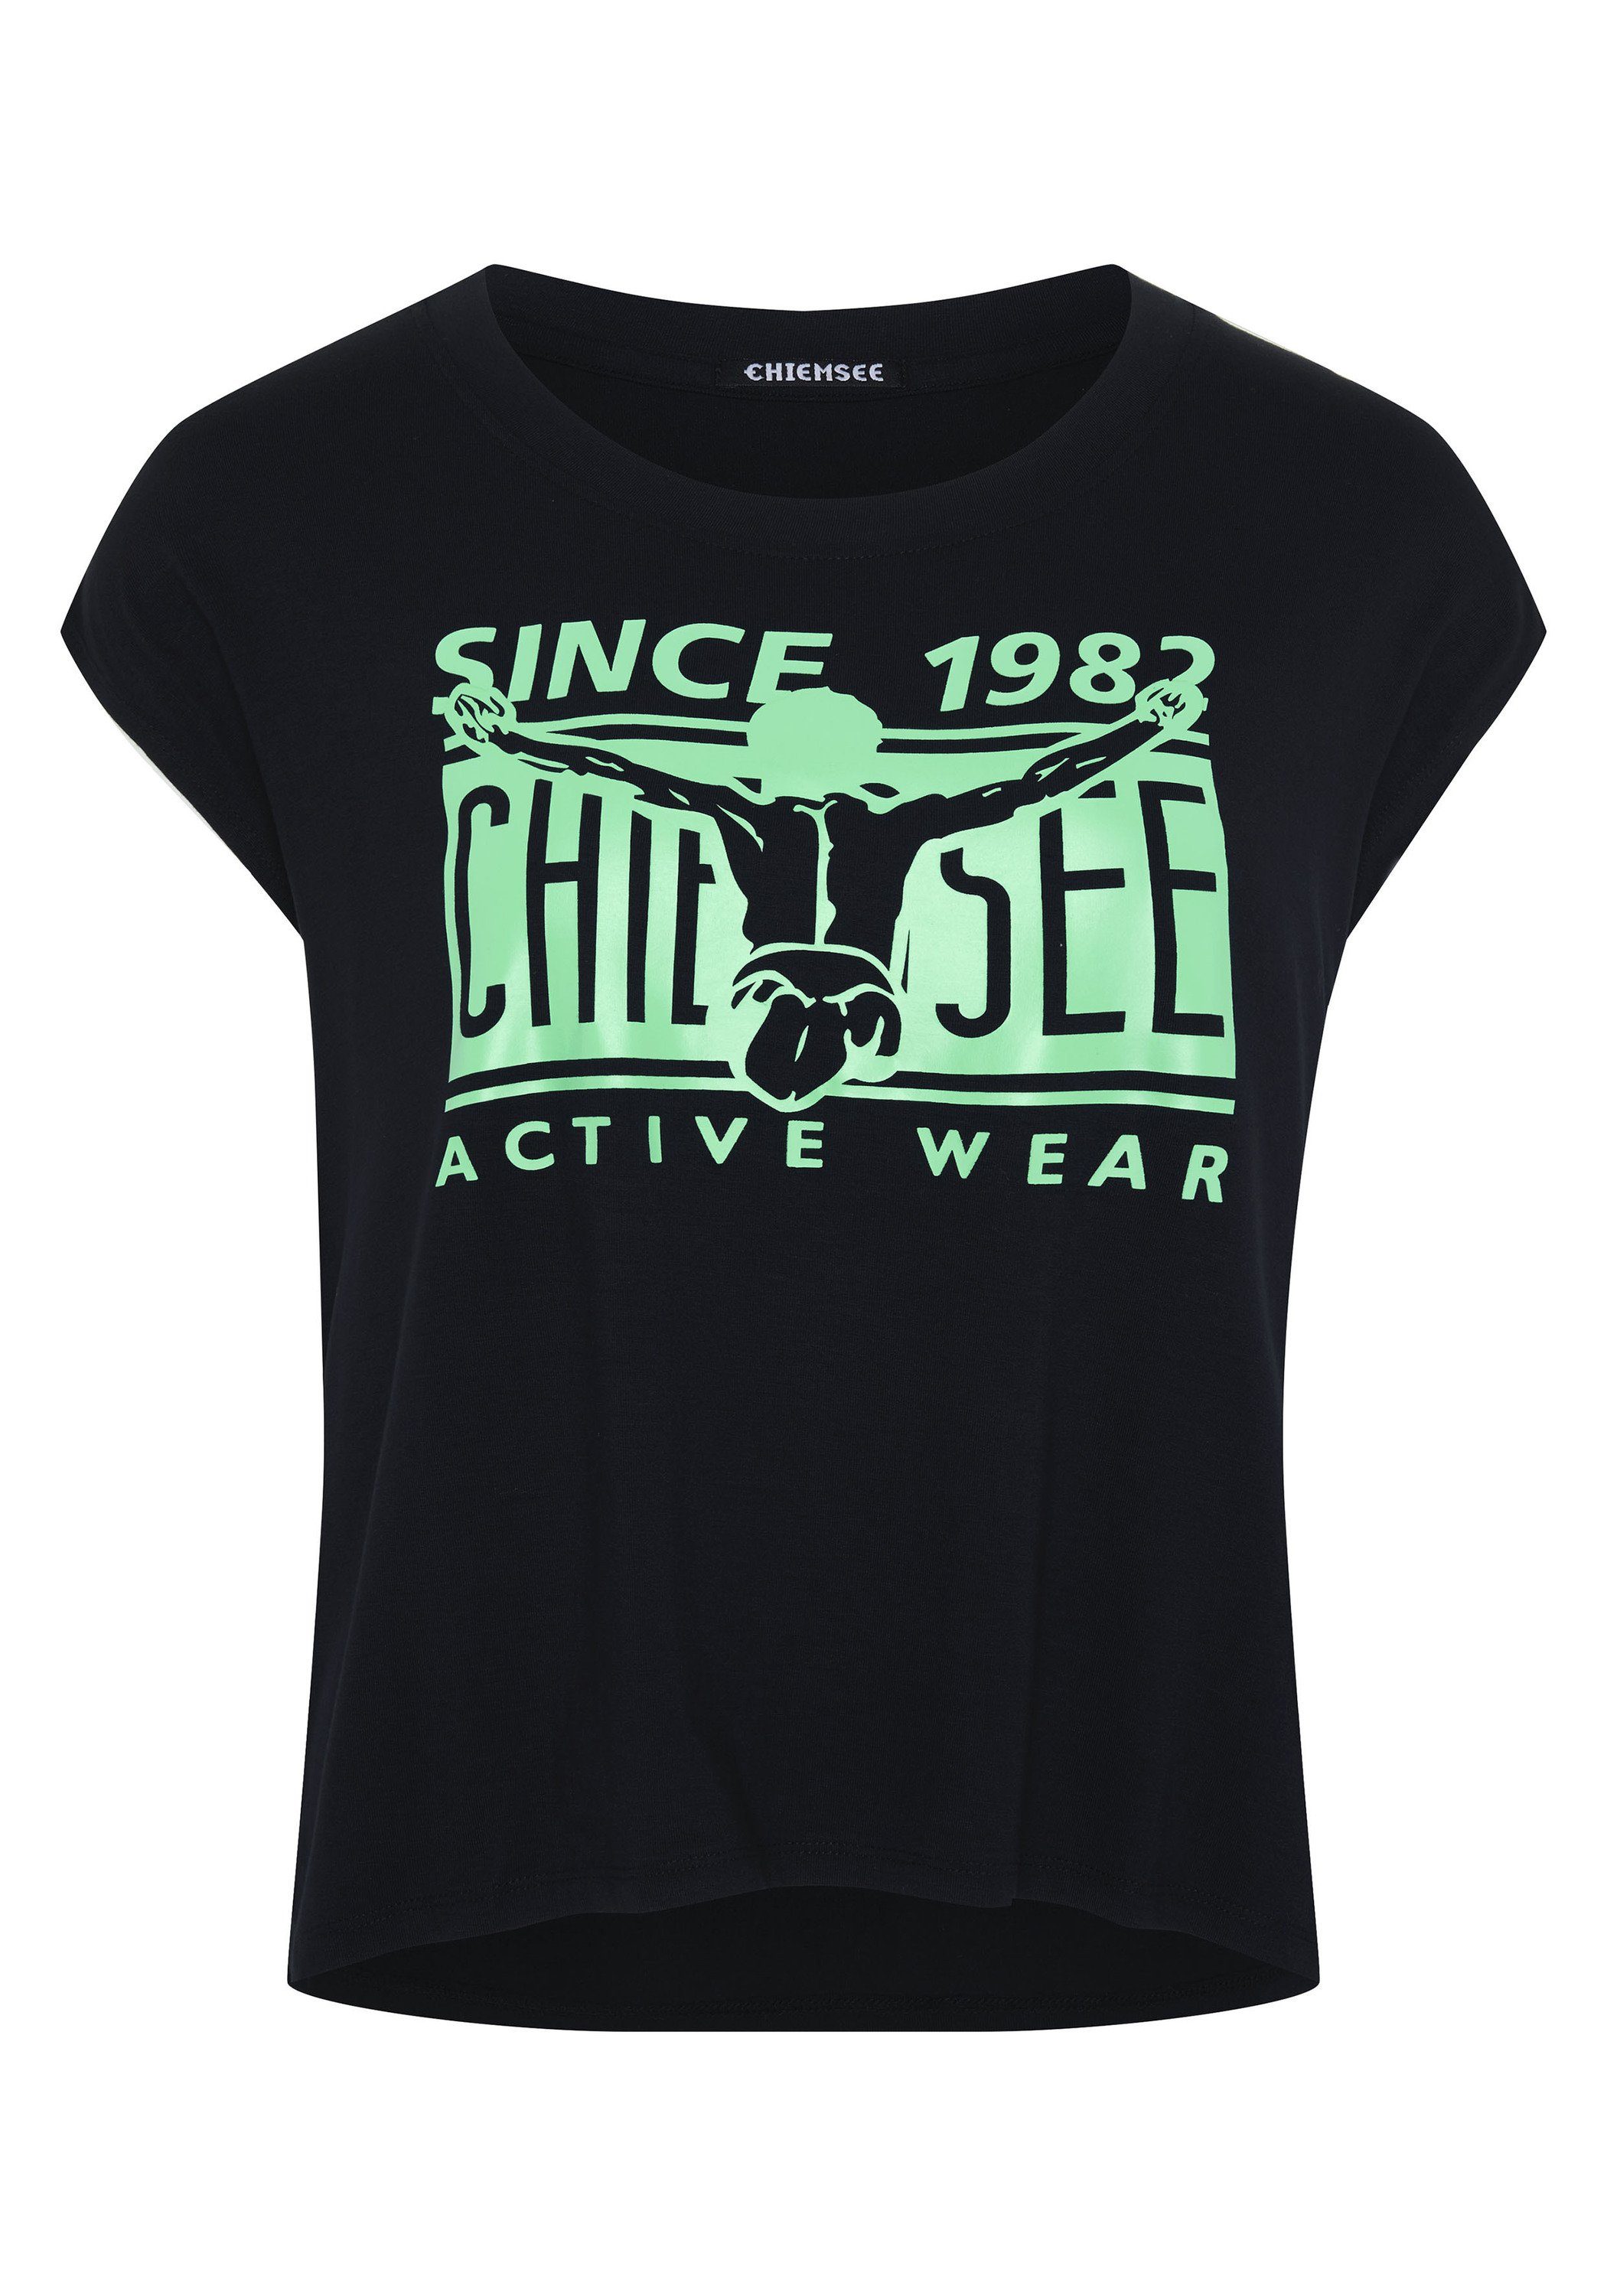 Viskose-Elasthanmix Chiemsee Black aus Deep mit Labelprint T-Shirt 1 Print-Shirt